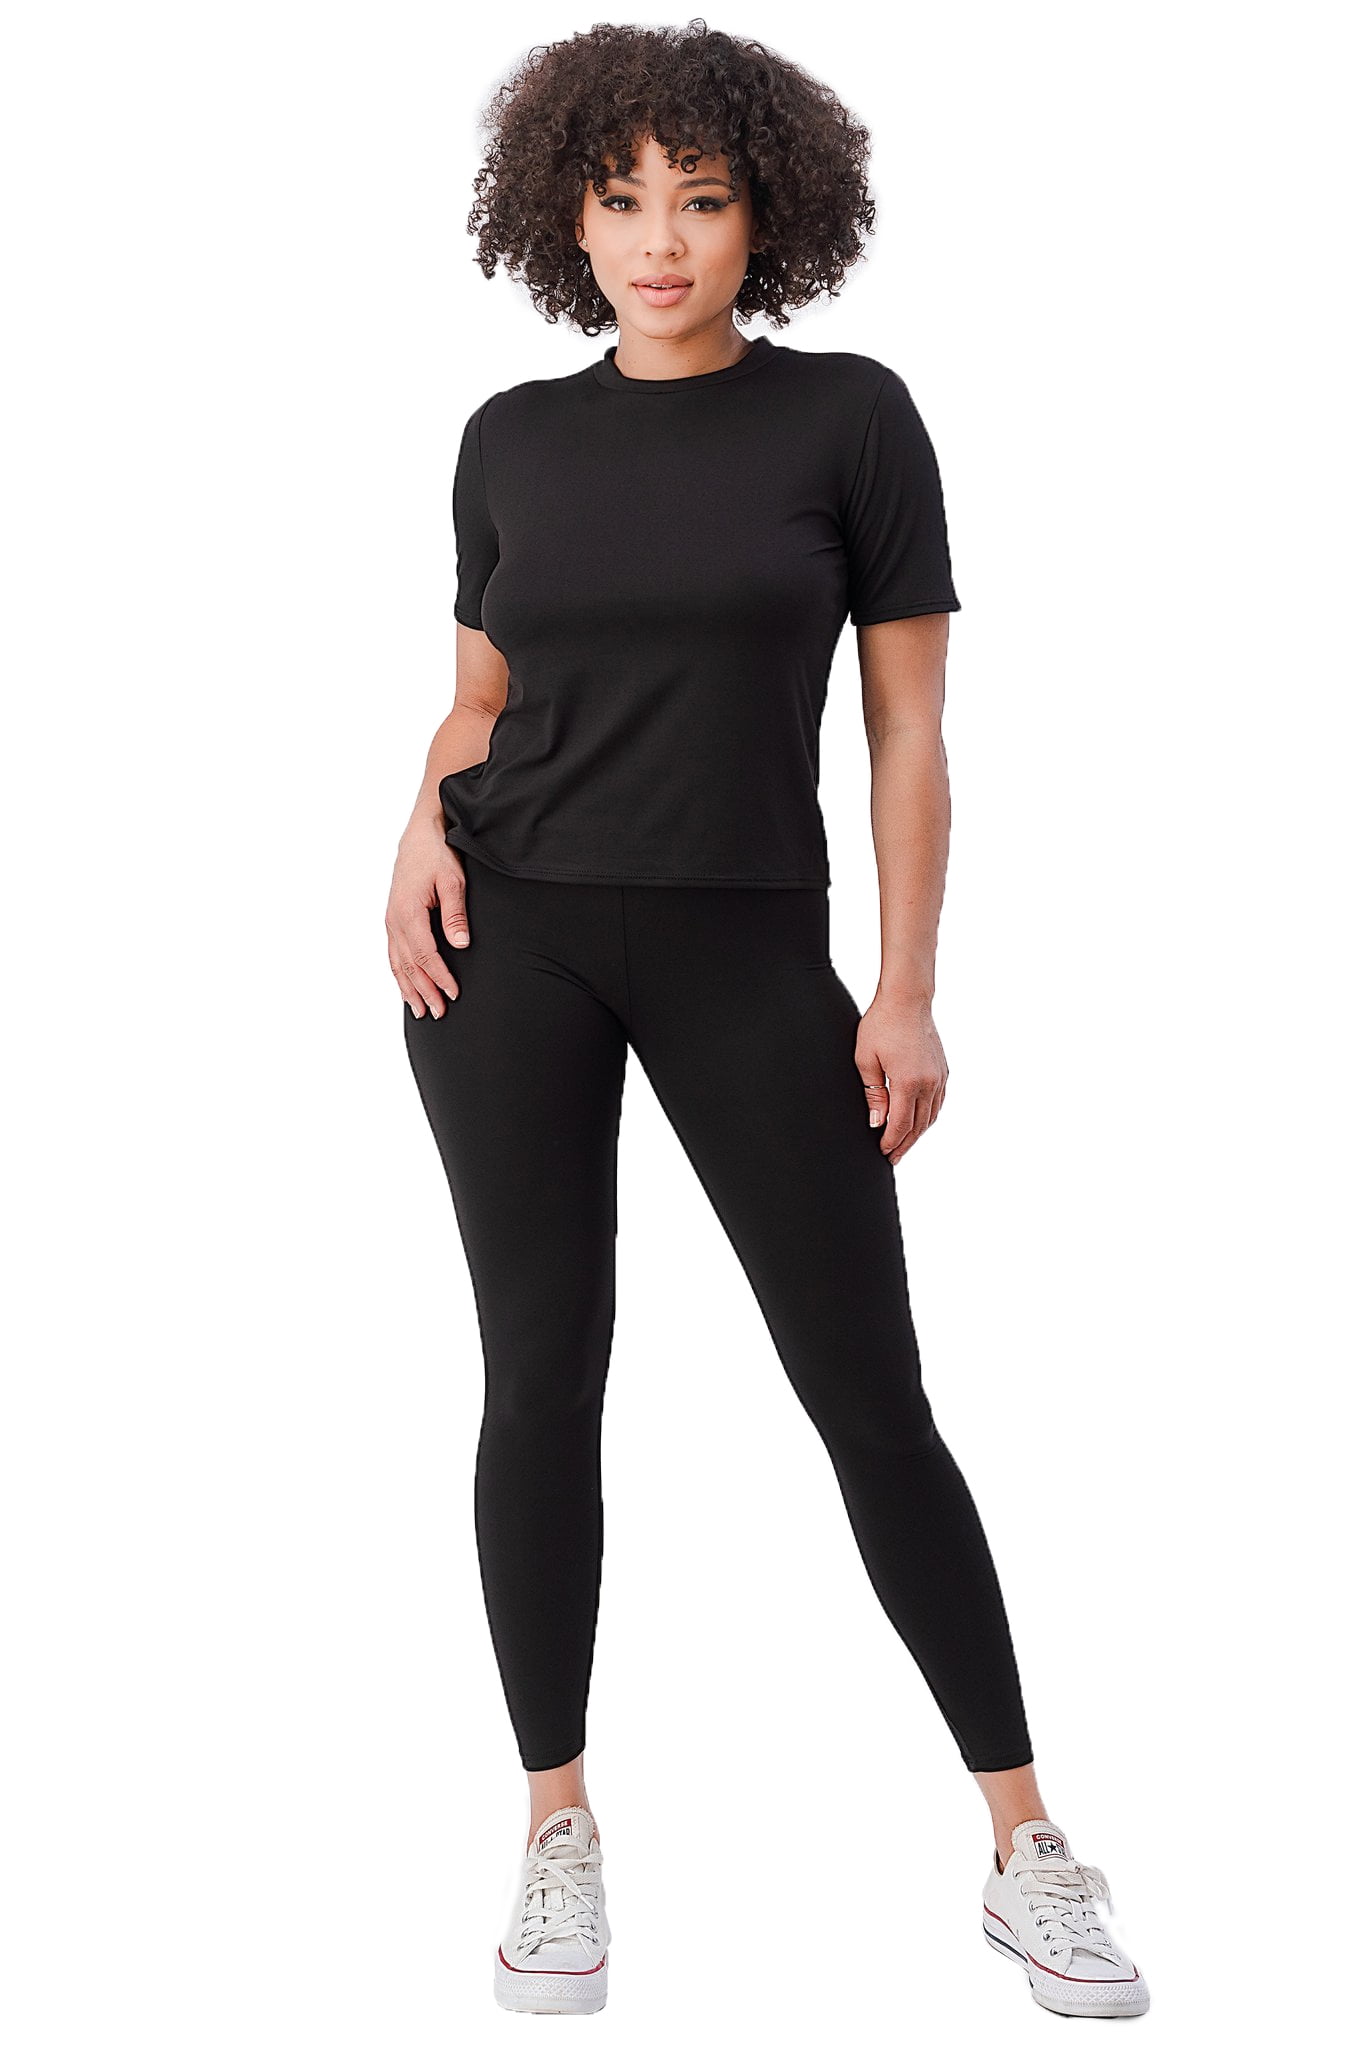 Women Full Length Solid T-Shirt Set With Leggings Black Large Black Large